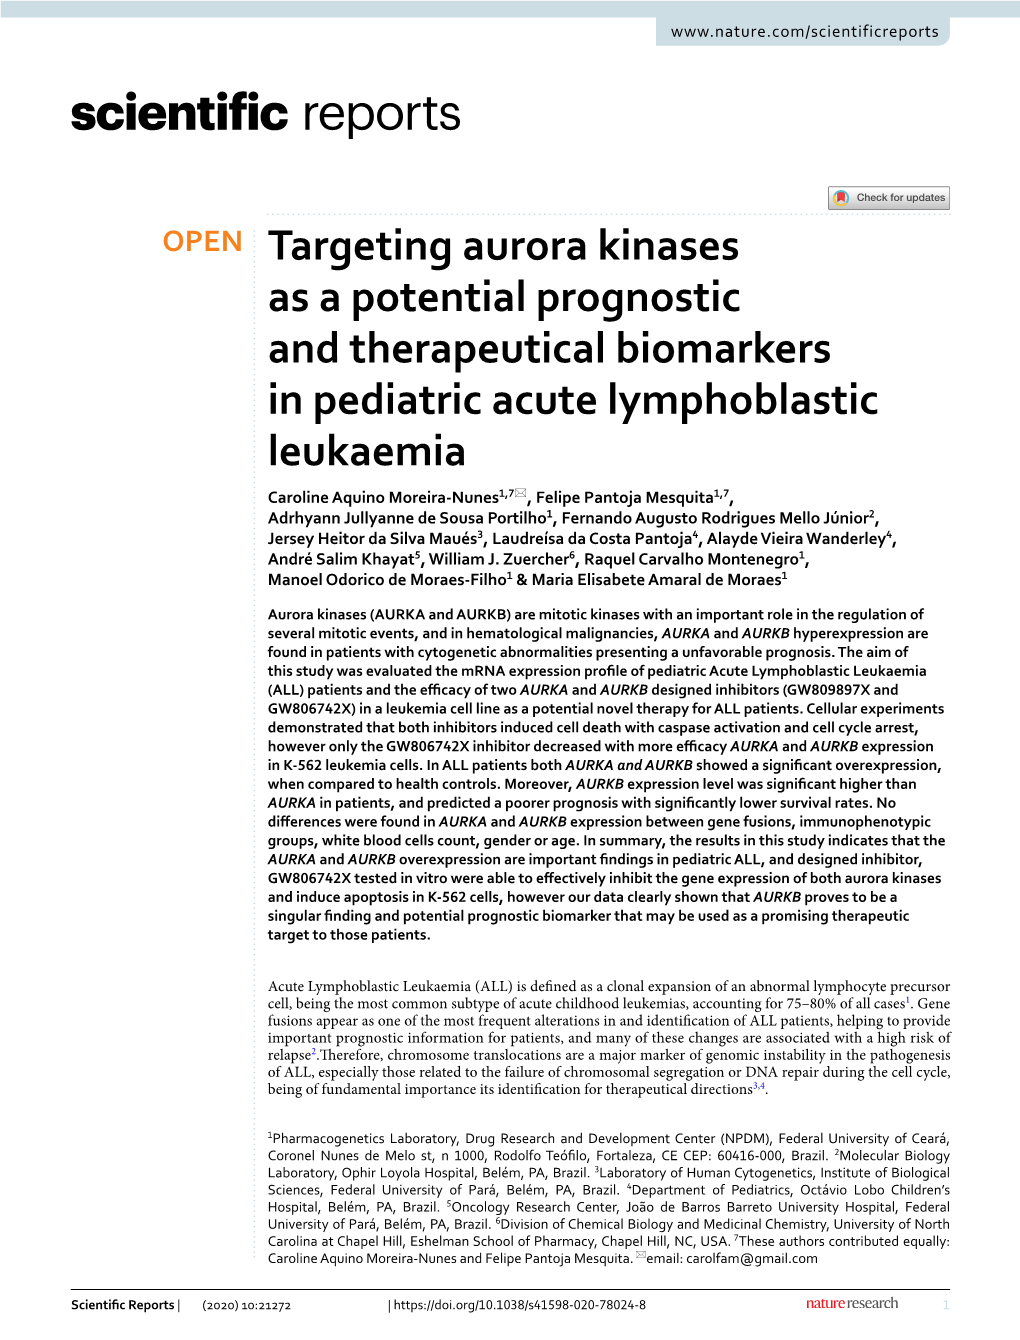 Targeting Aurora Kinases As a Potential Prognostic and Therapeutical Biomarkers in Pediatric Acute Lymphoblastic Leukaemia